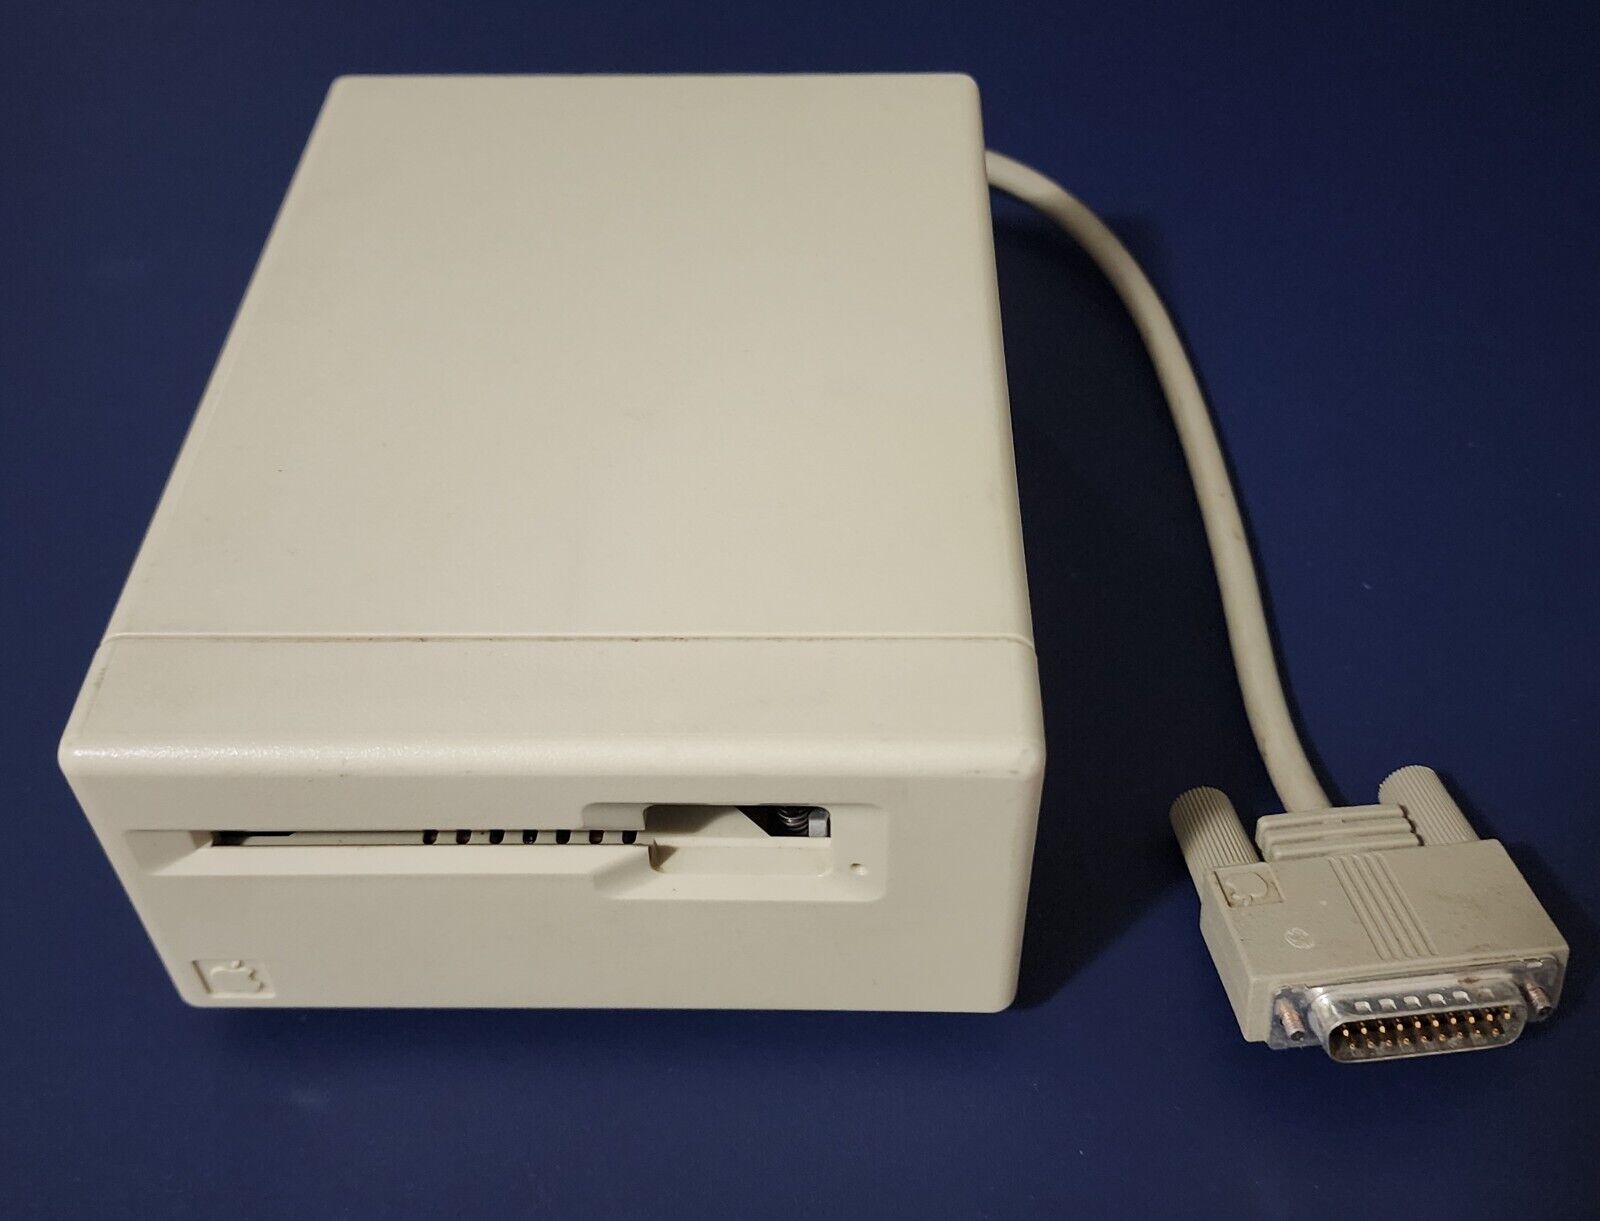 Vintage Apple Macintosh 400k External Floppy Disk Drive Model M0130 